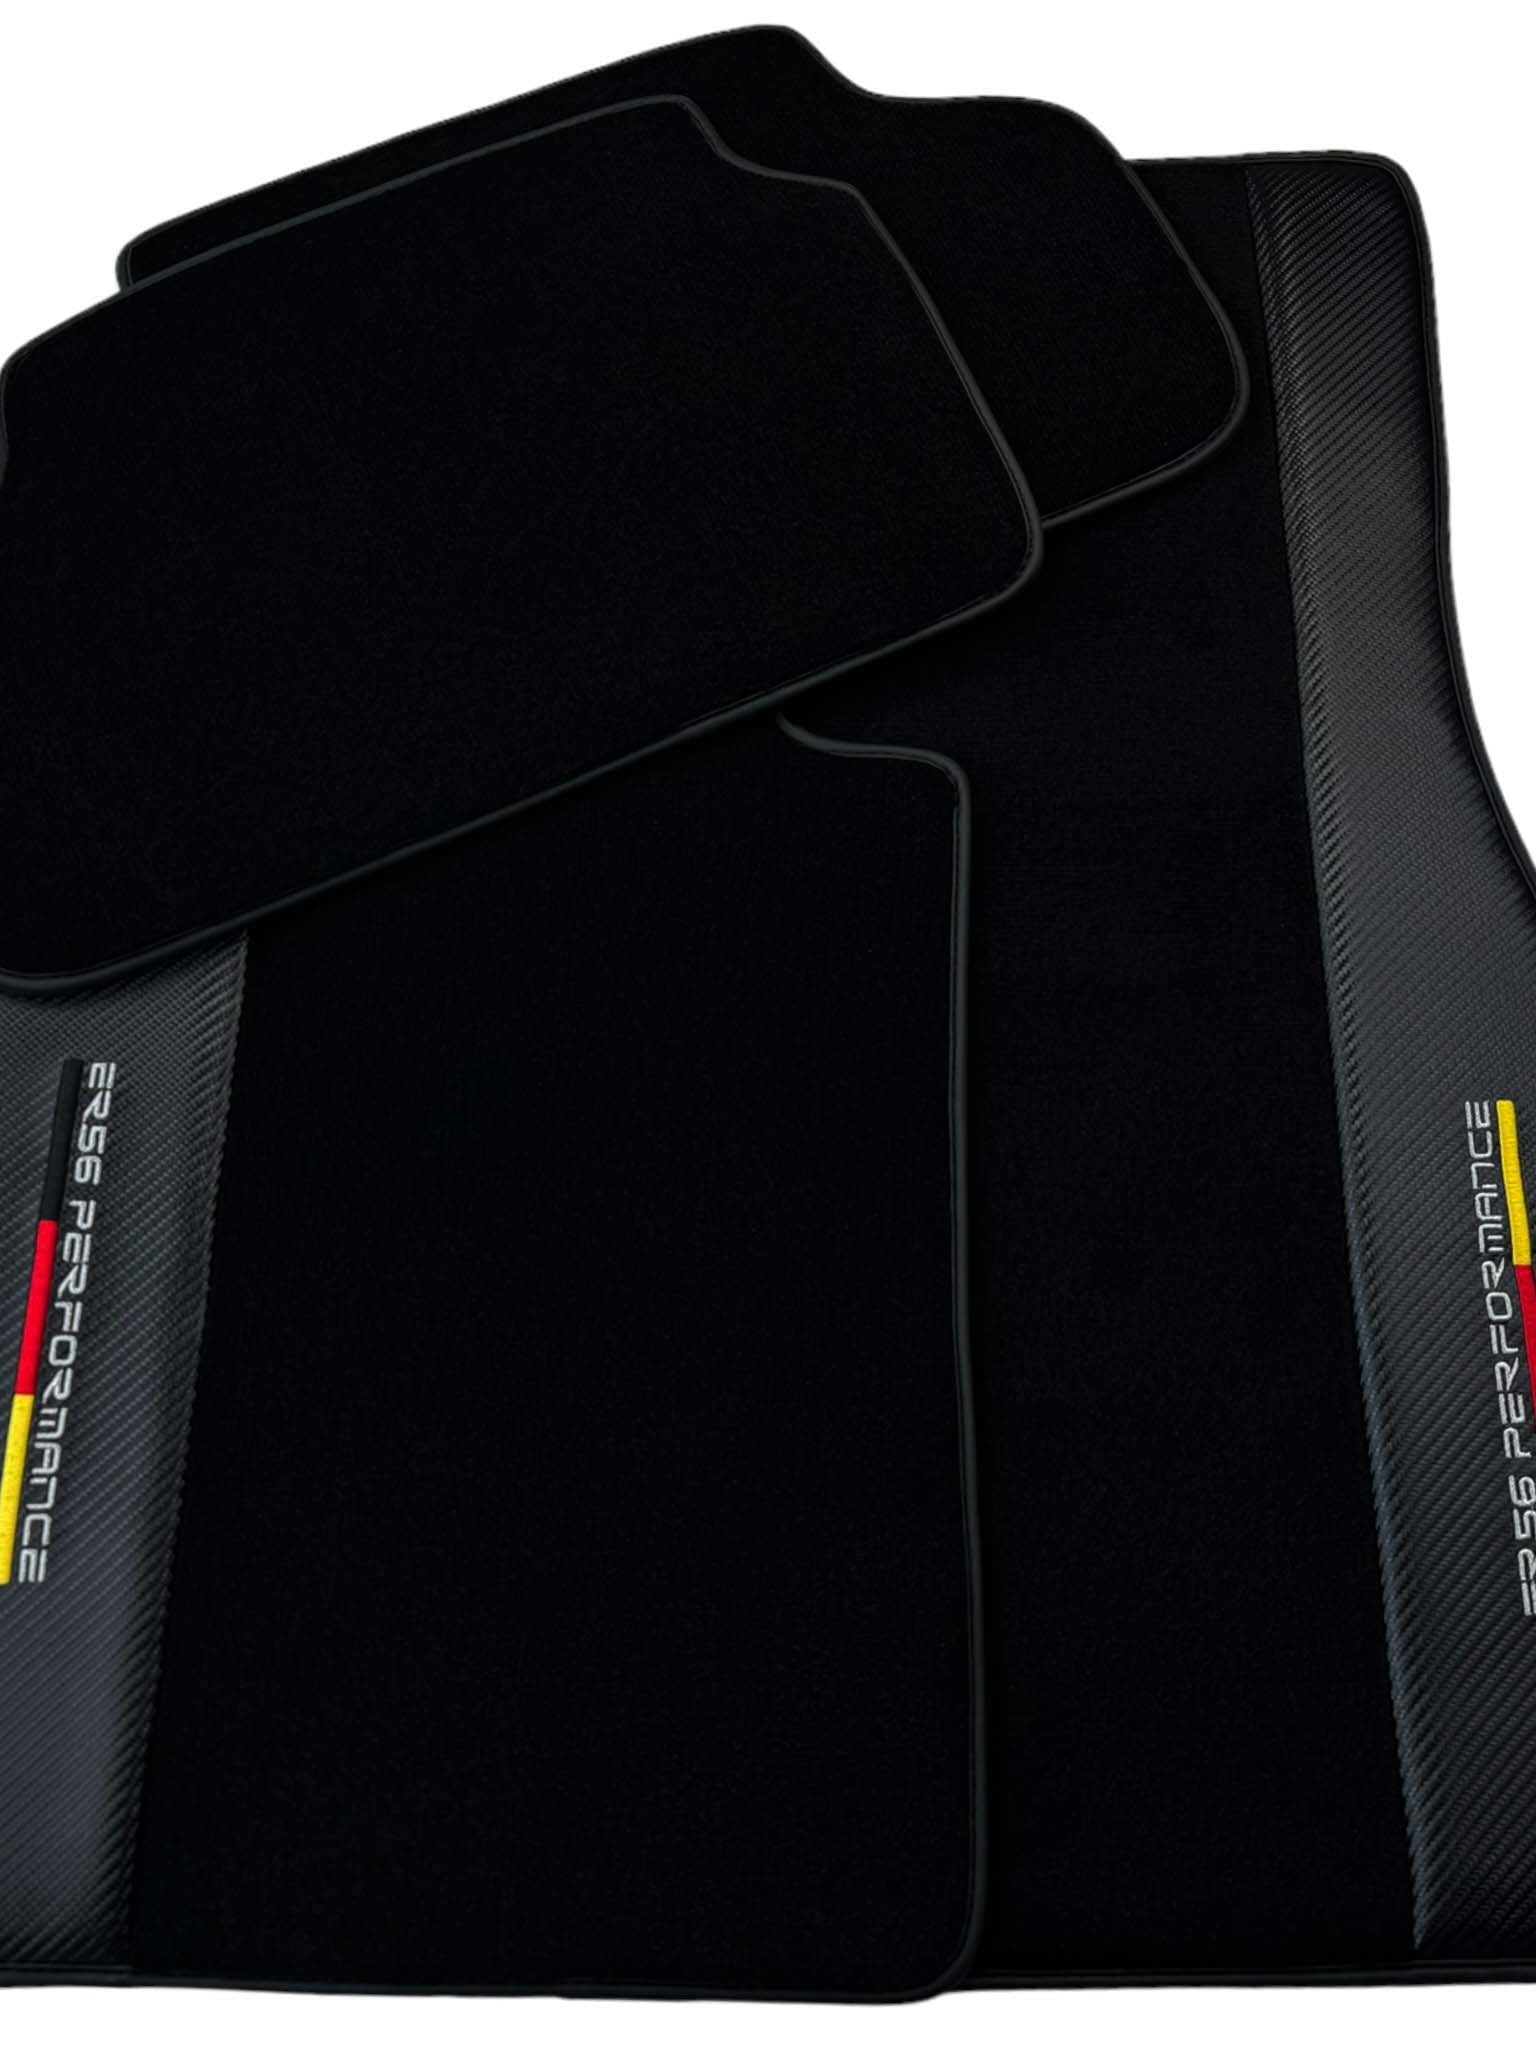 Black Floor Floor Mats For BMW M4 Series F83 | ER56 Performance | Carbon Edition